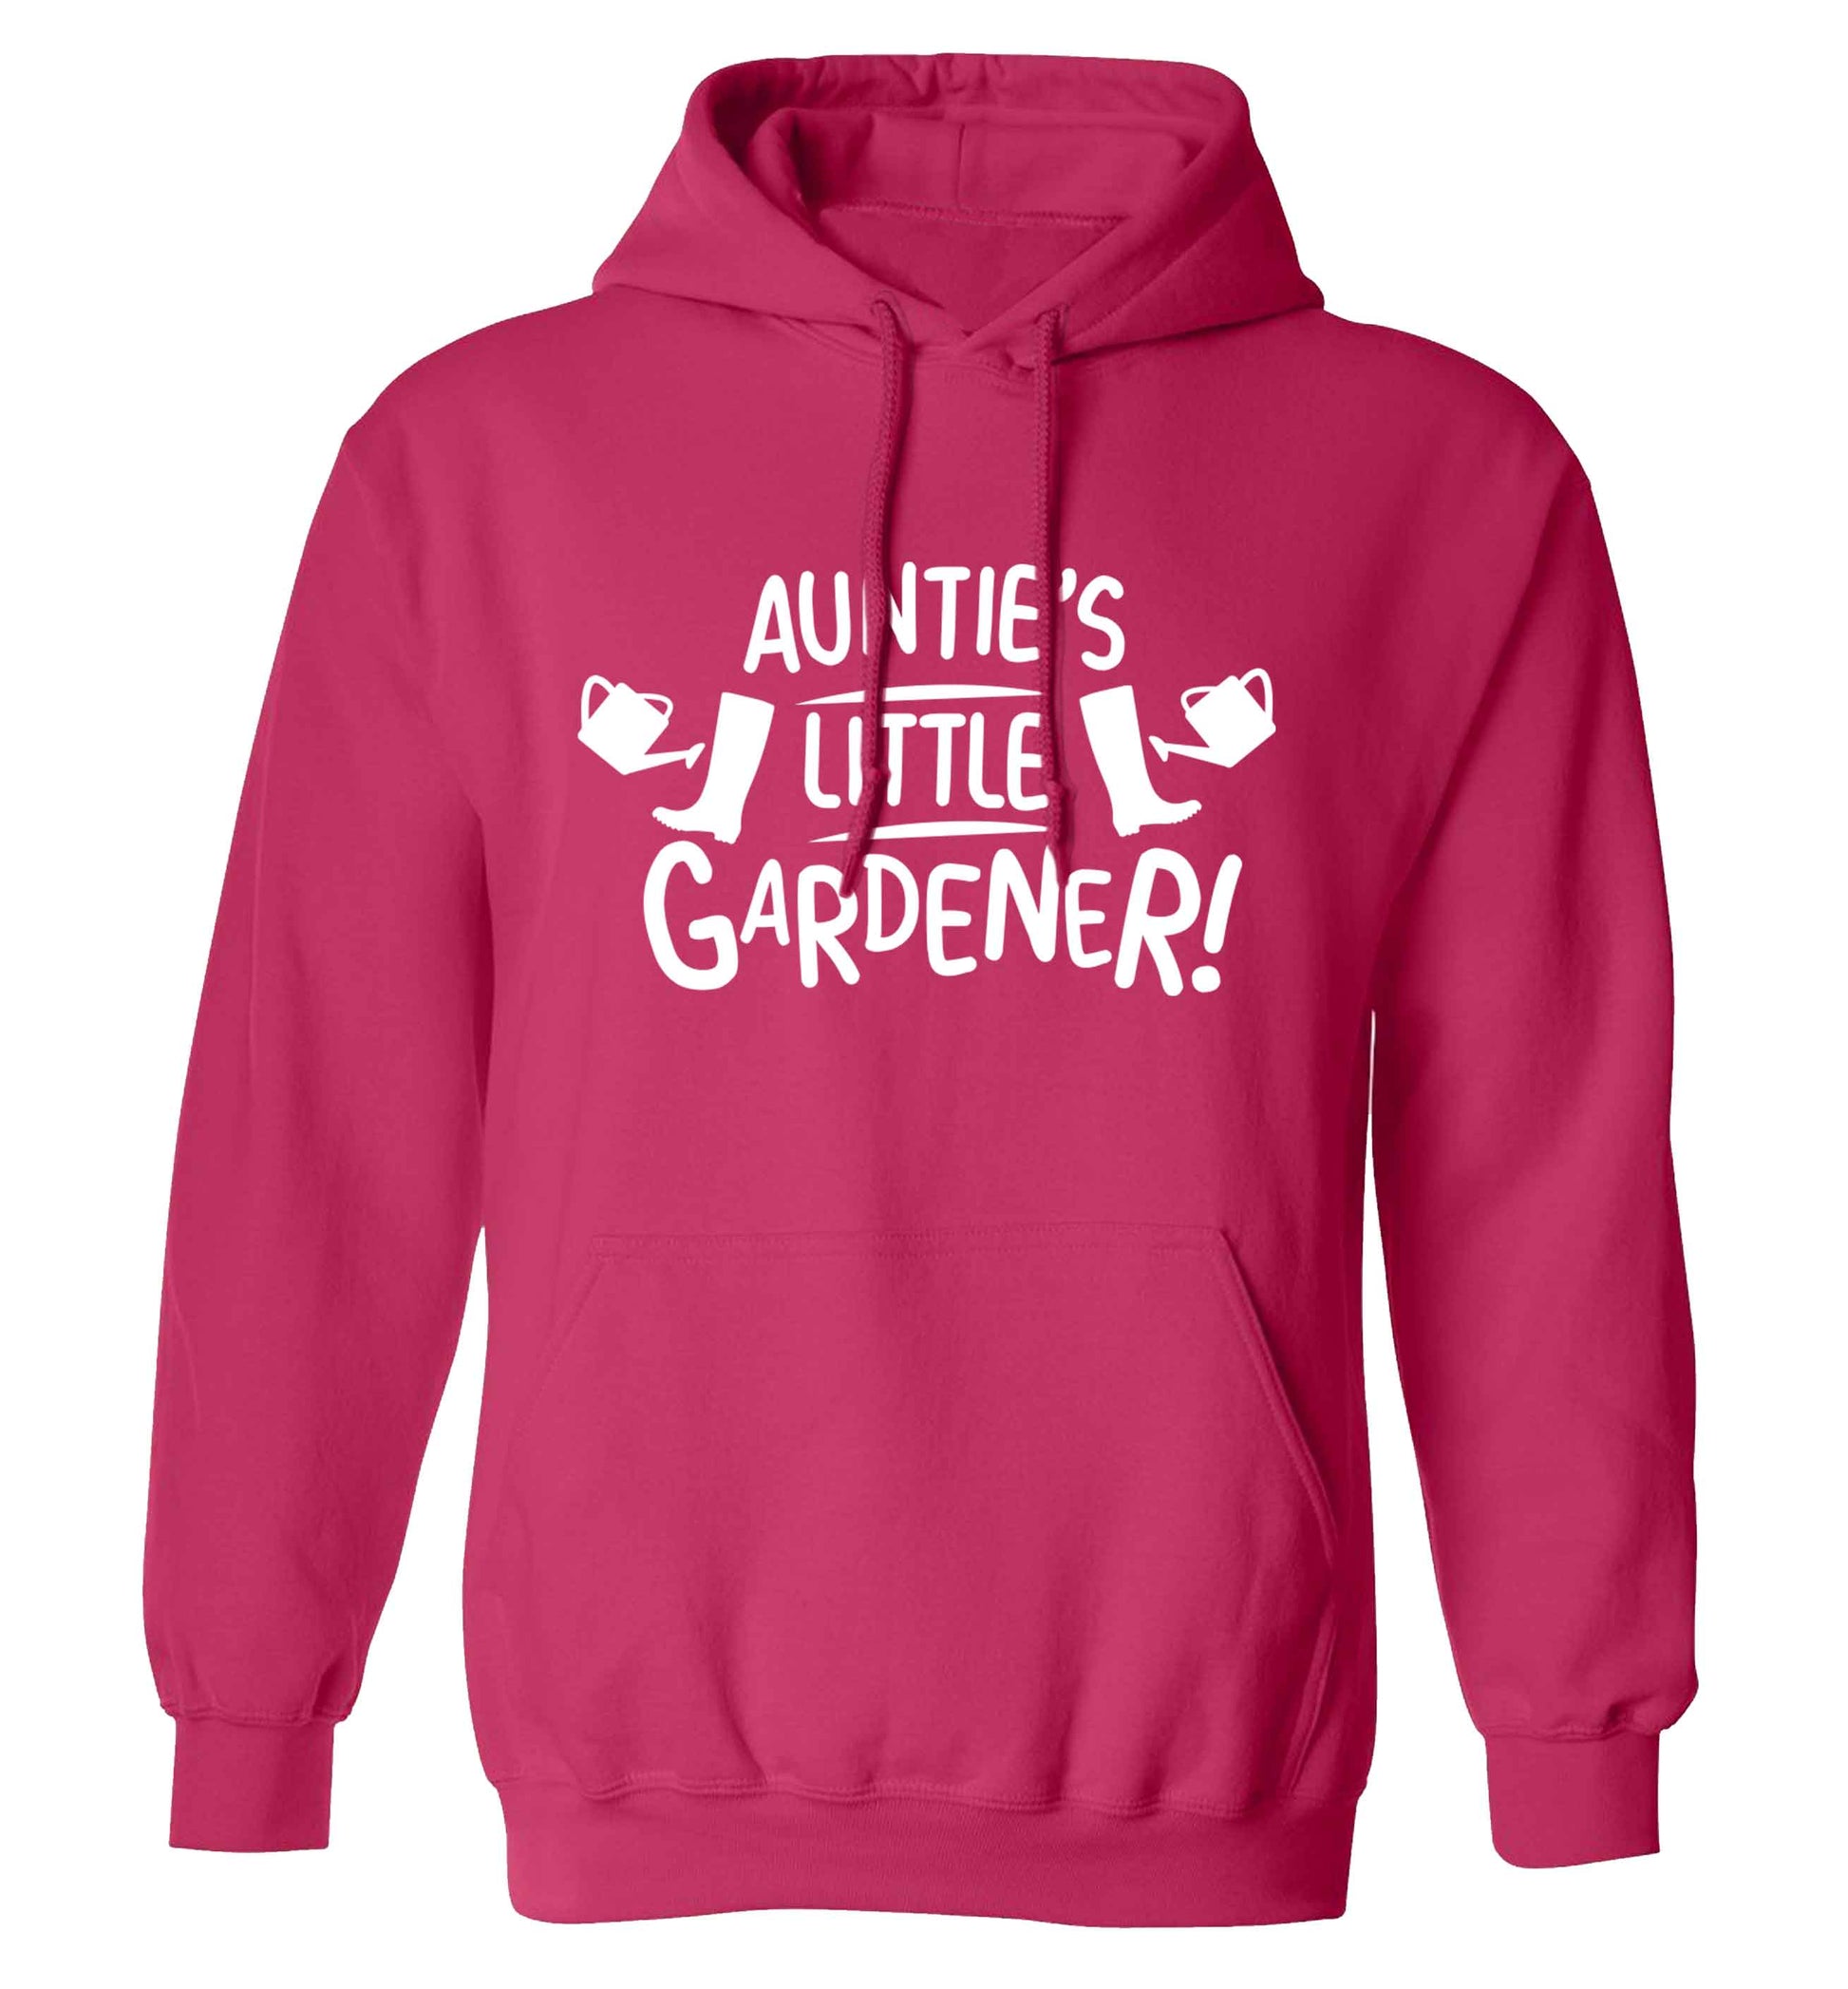 Auntie's little gardener adults unisex pink hoodie 2XL